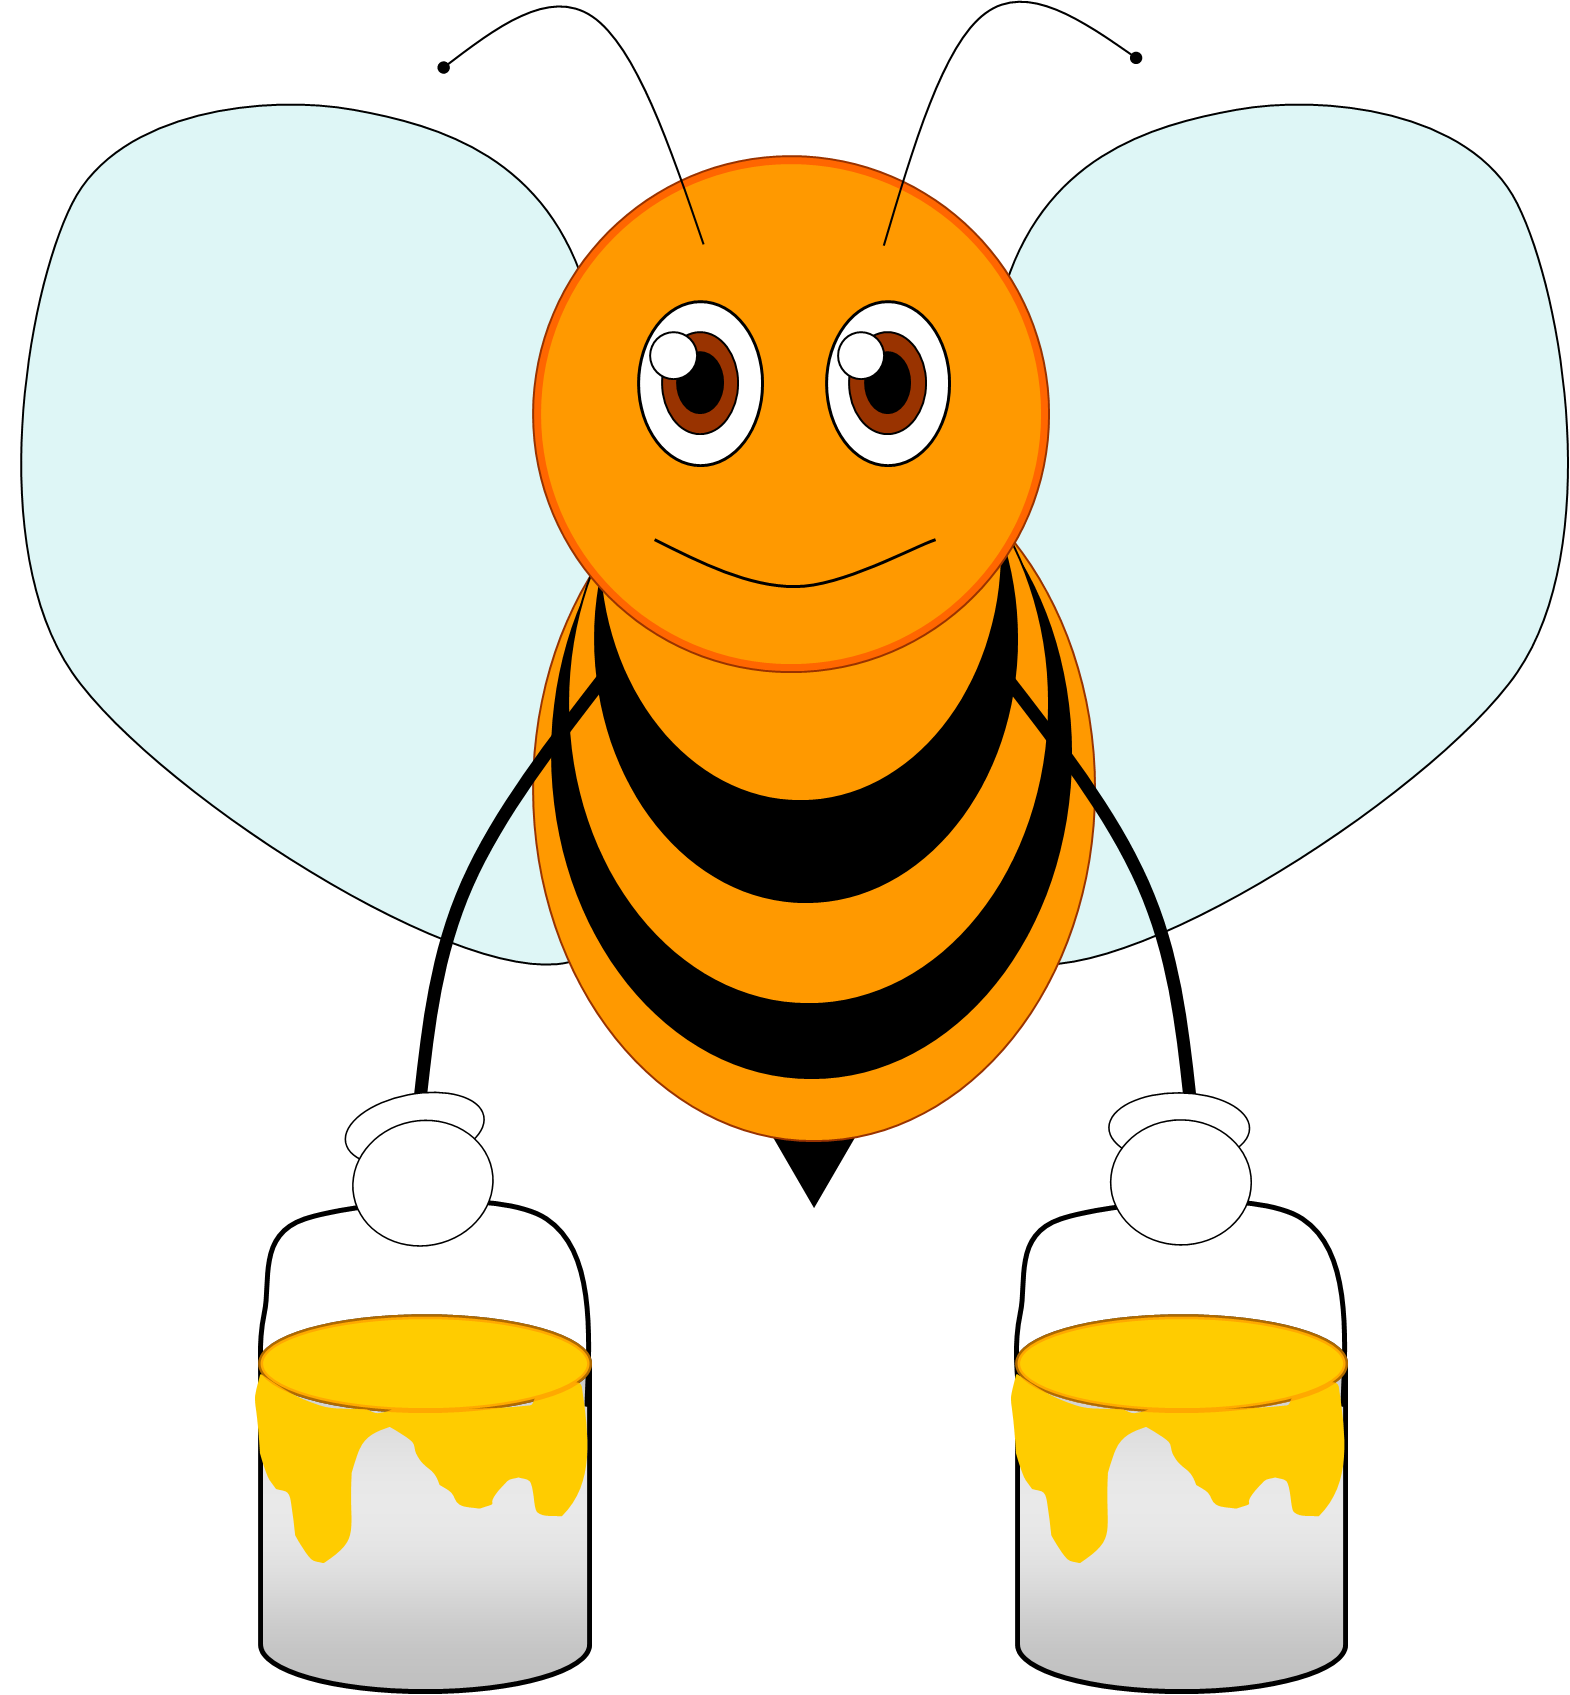 Bee 2 image - vector clip art online, royalty free  public domain